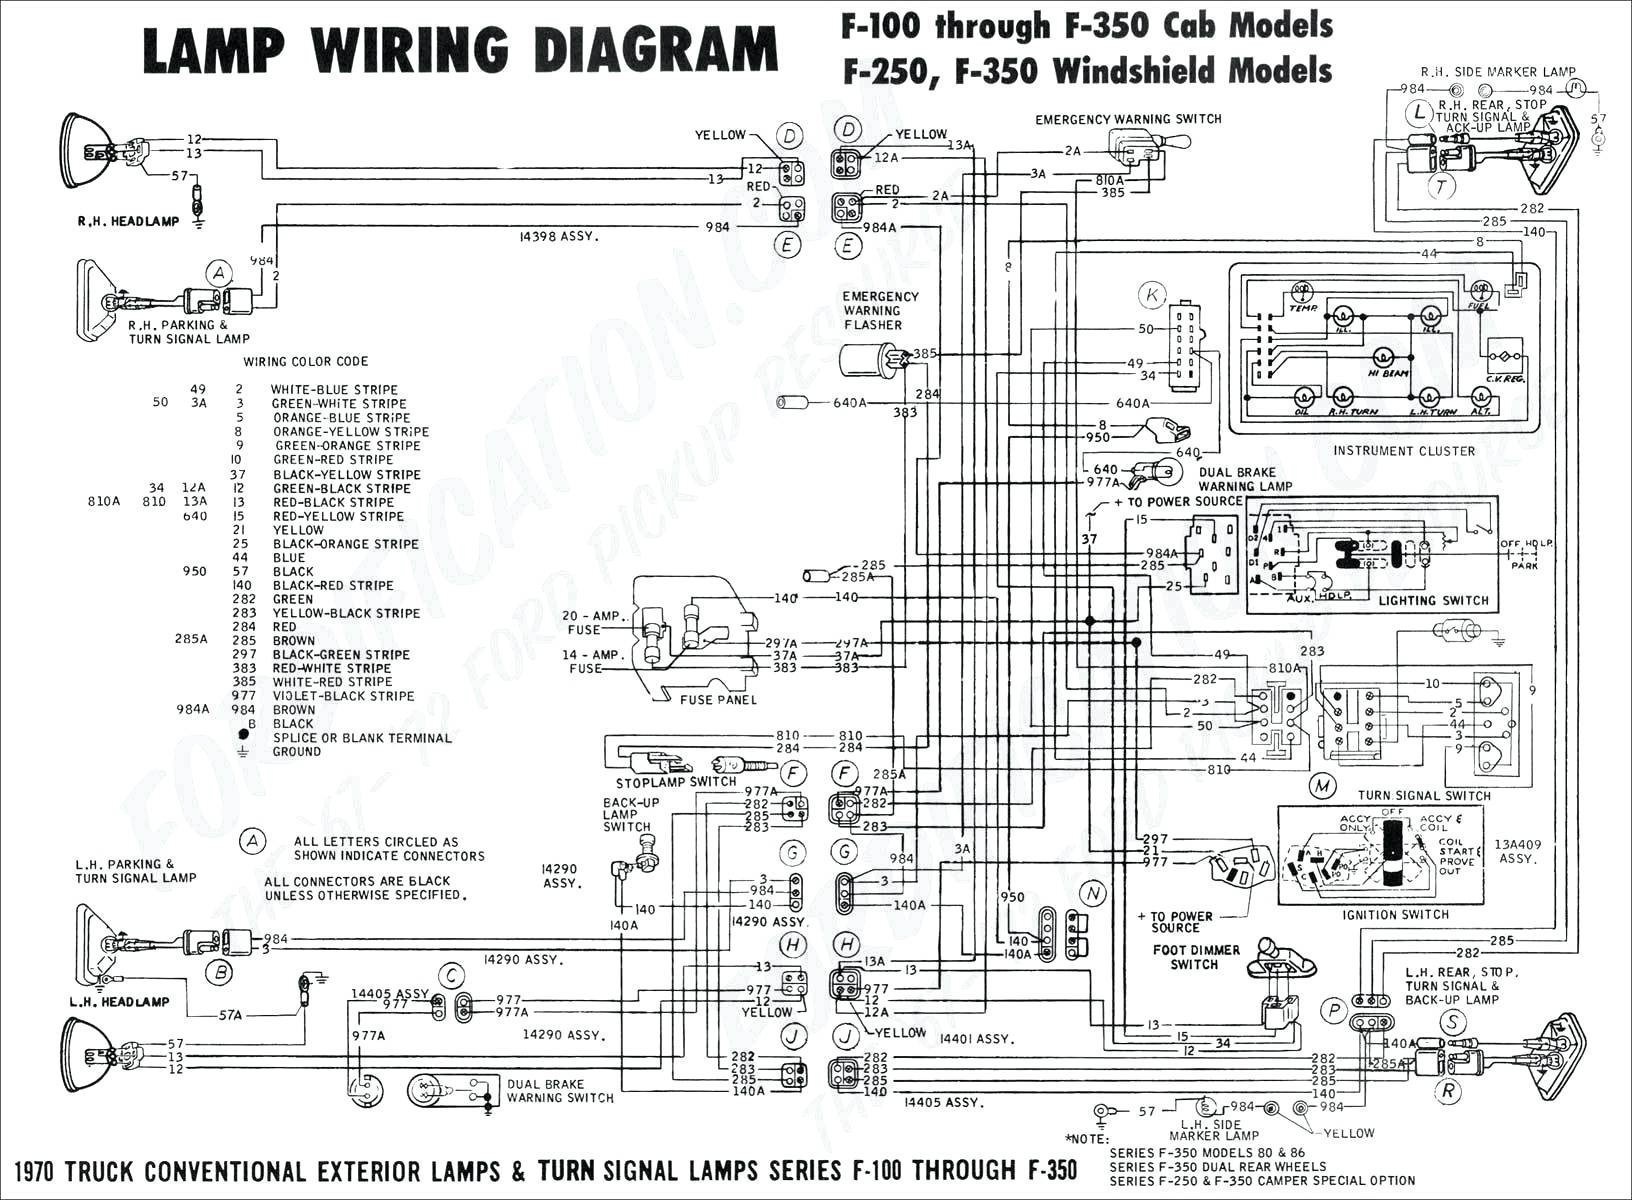 Yamaha Outboard Wiring Diagram Inspirational Wiring Diagram Yamaha Outboard Archives